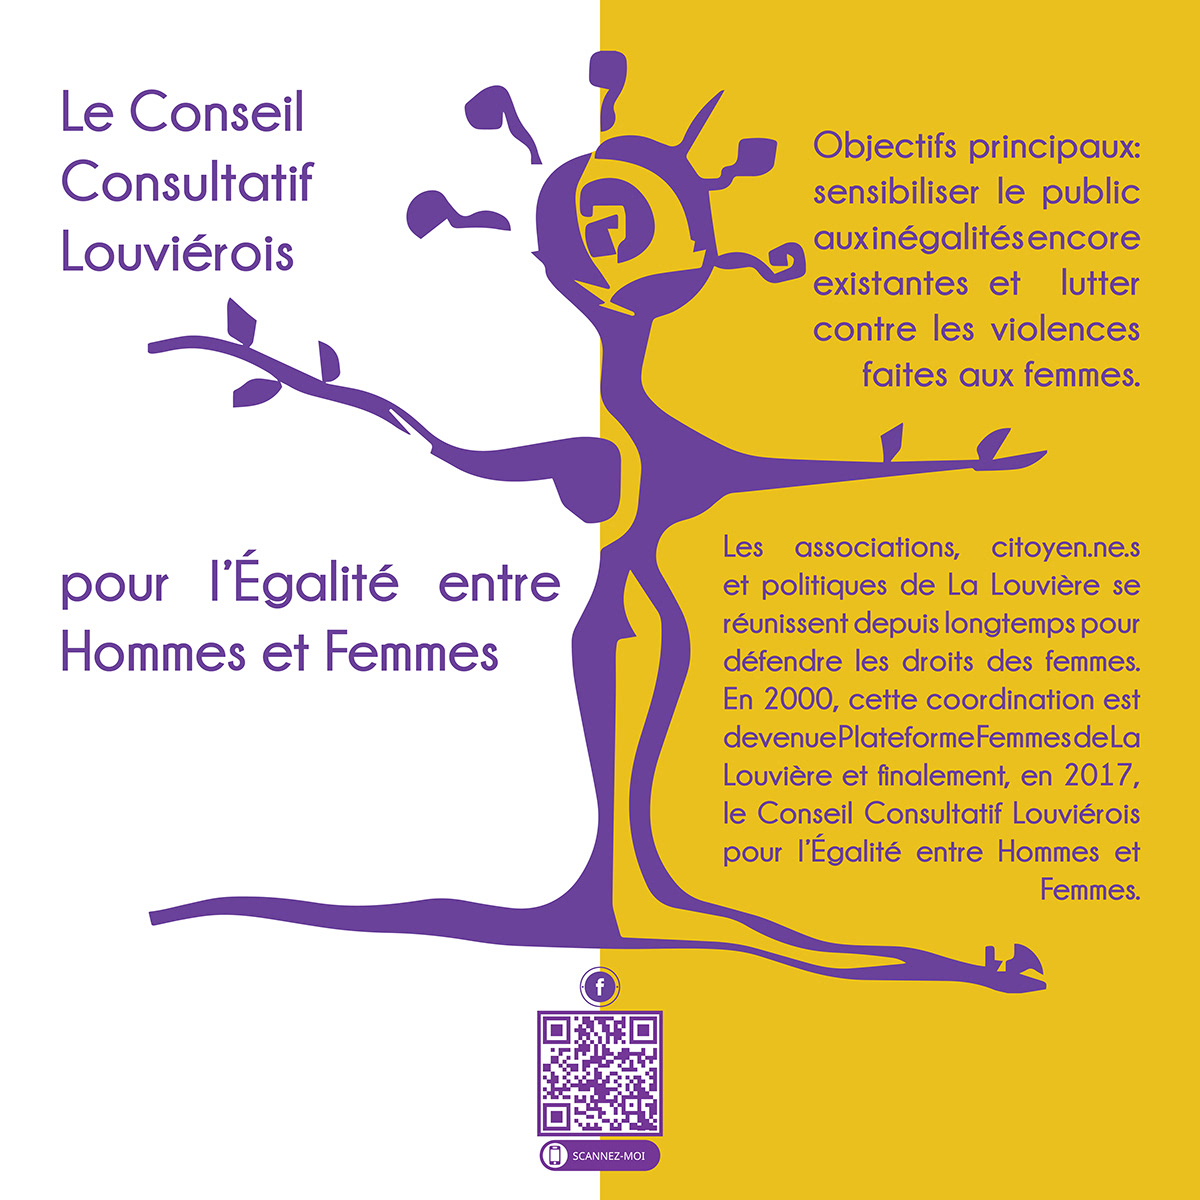 La Louvière fight March 8 tarpaulins women's rights